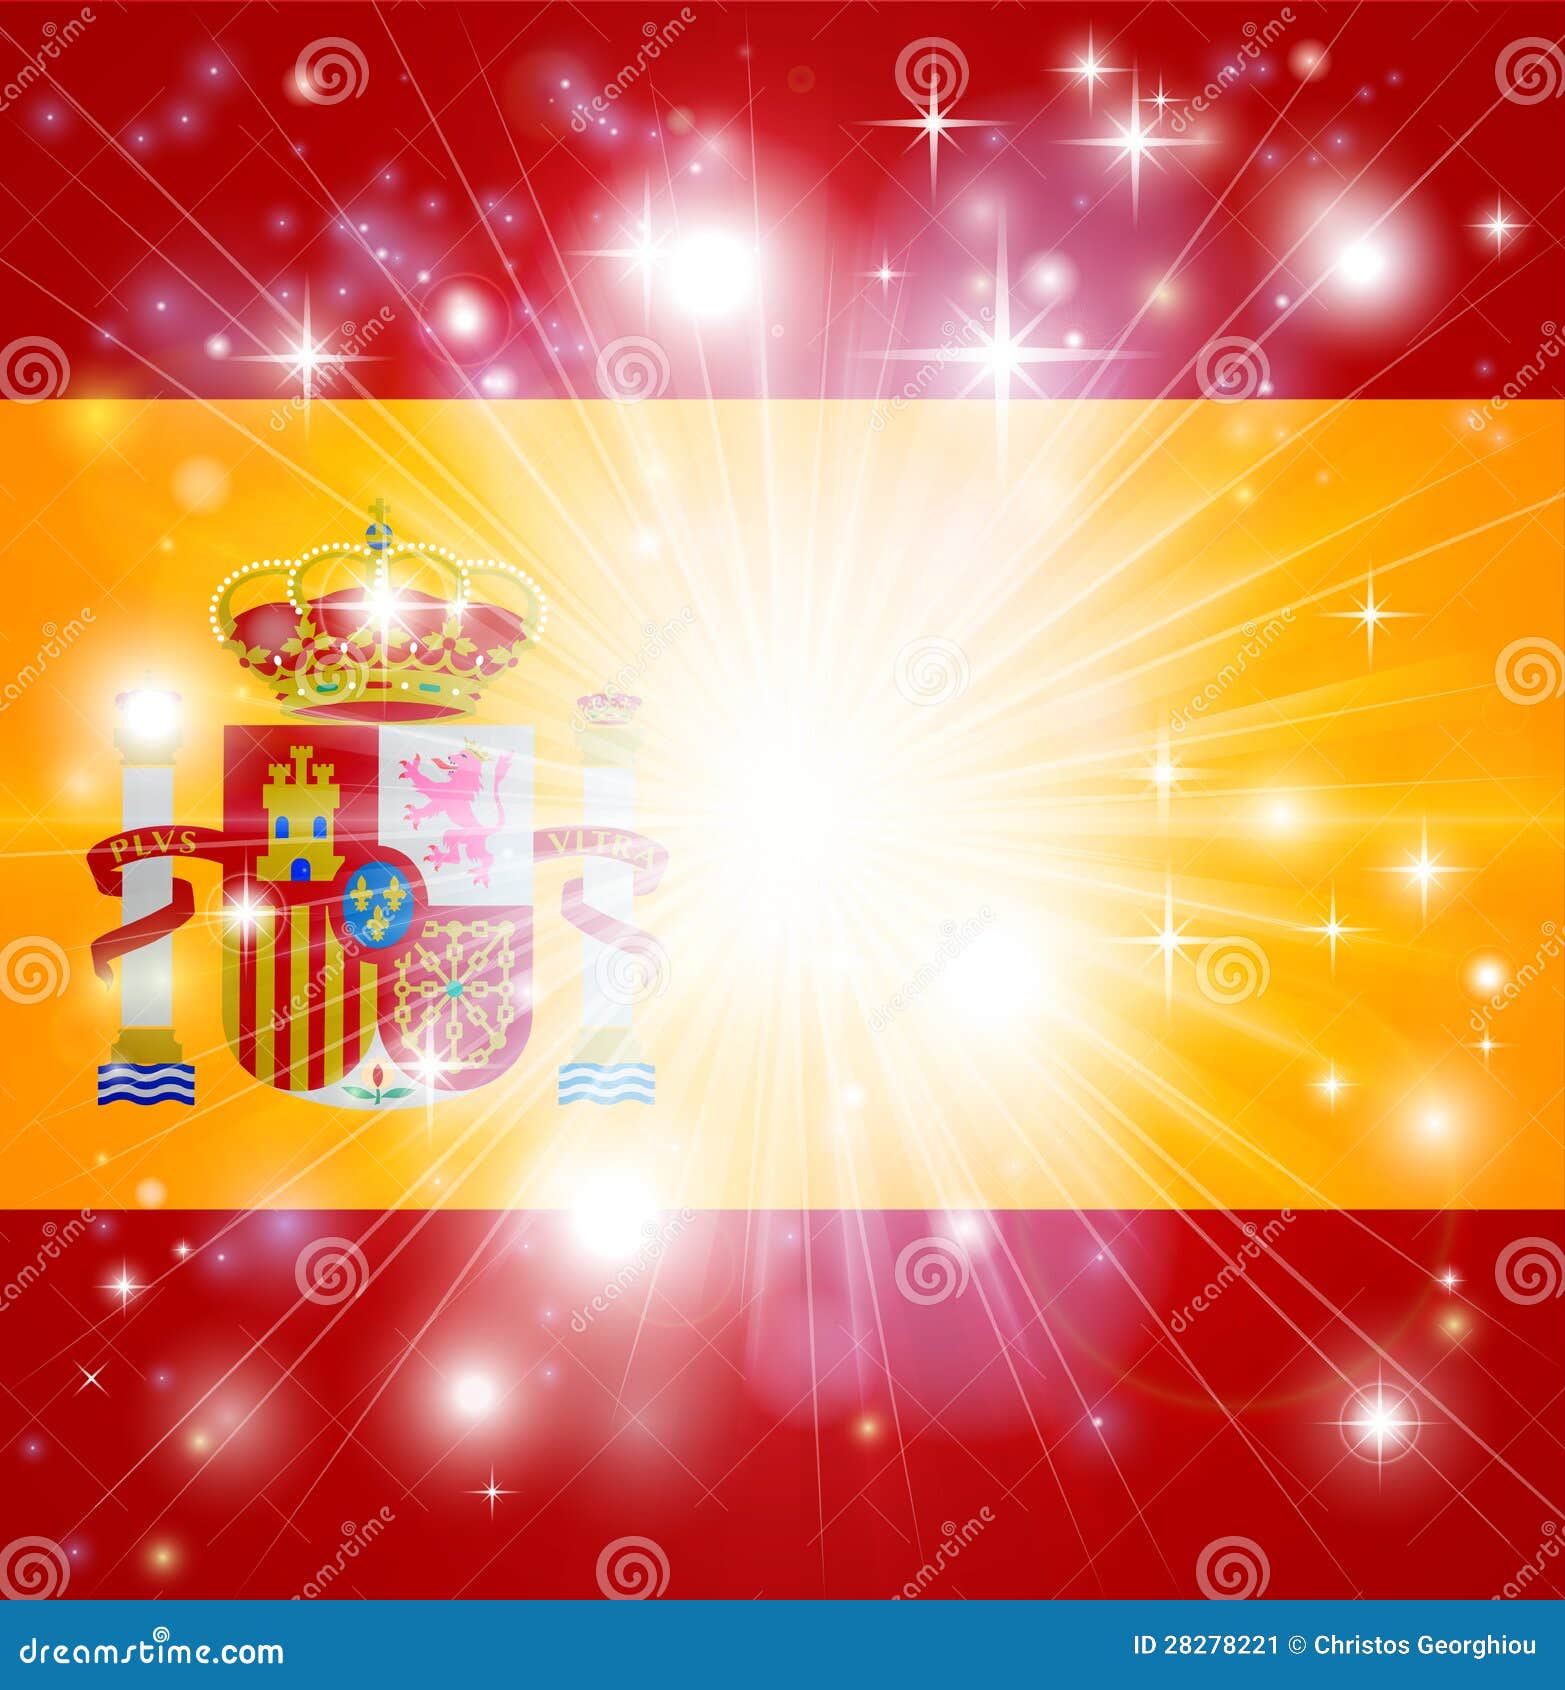 Spanish flag background stock vector. Illustration of politics - 28278221